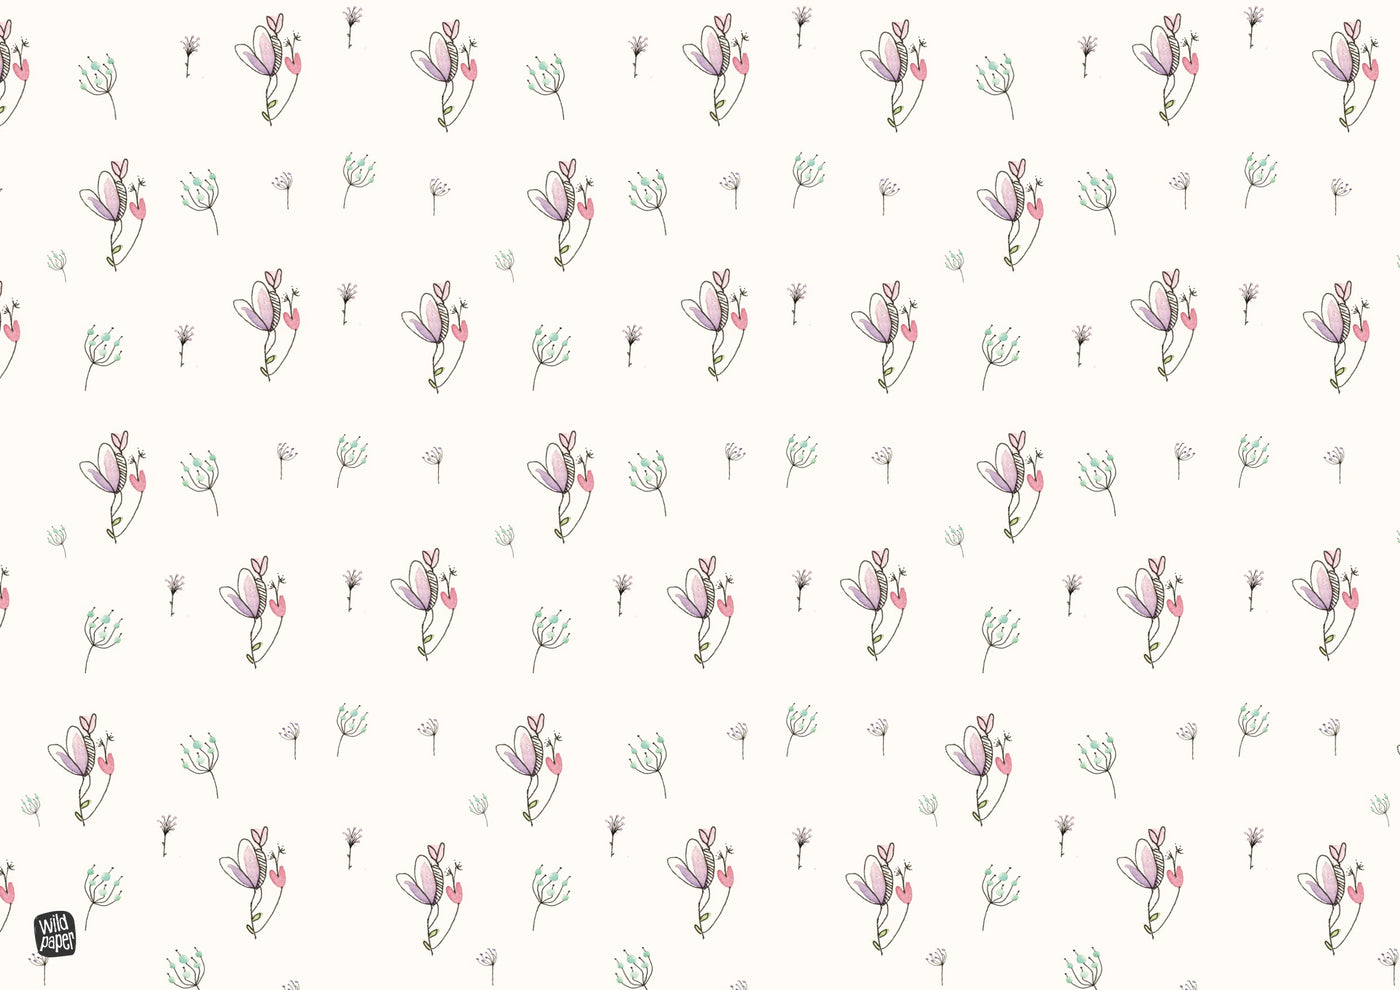 Wildgarden Pattern Sheets (Set of 5)